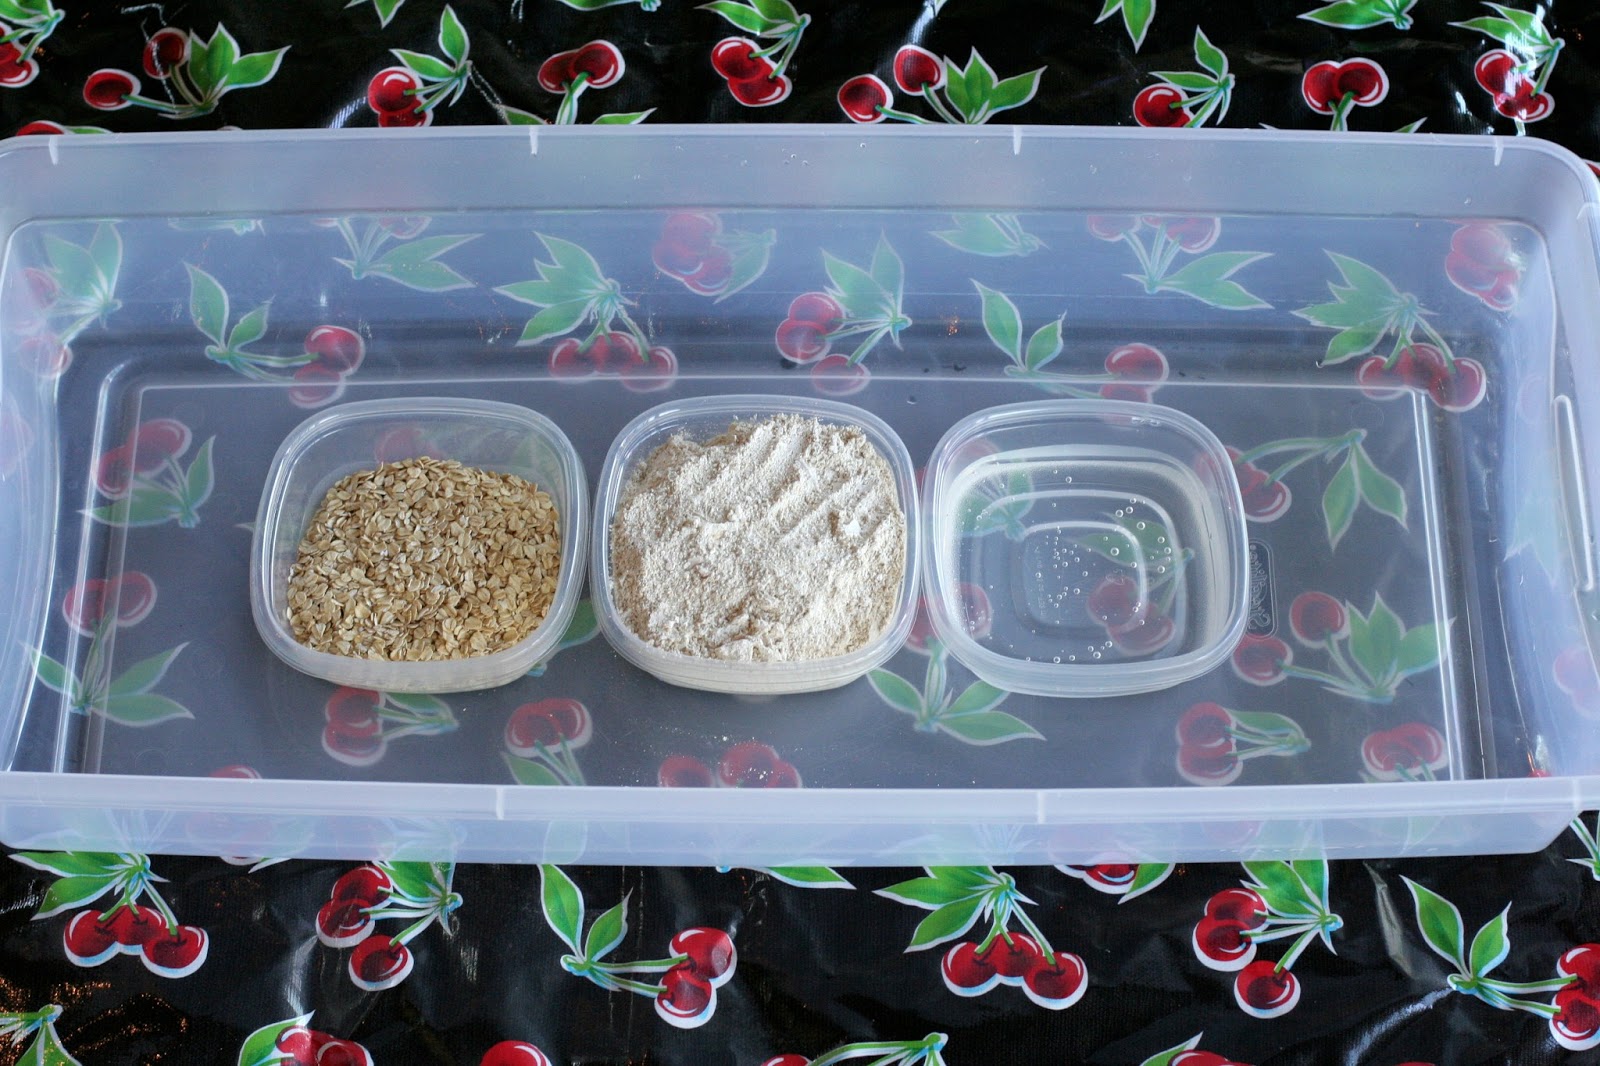 Oatmeal container straw game: fun DIY toddler indoor activity - Merriment  Design